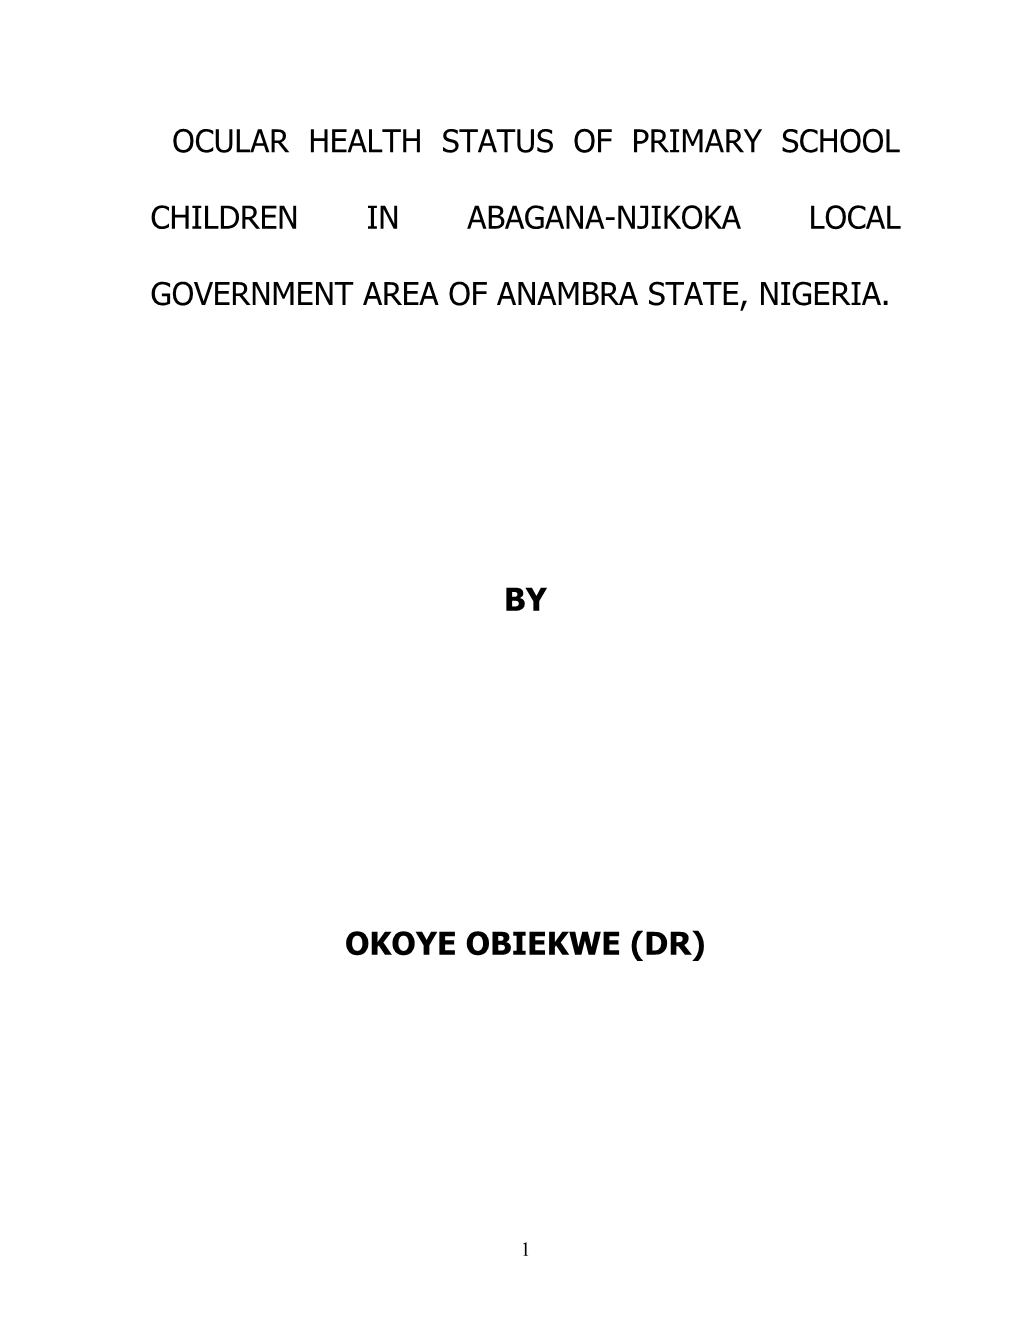 Ocular Health Status of Primary School Children in Abagana -Njikoka Local Government Area of Anambra State Nigeria